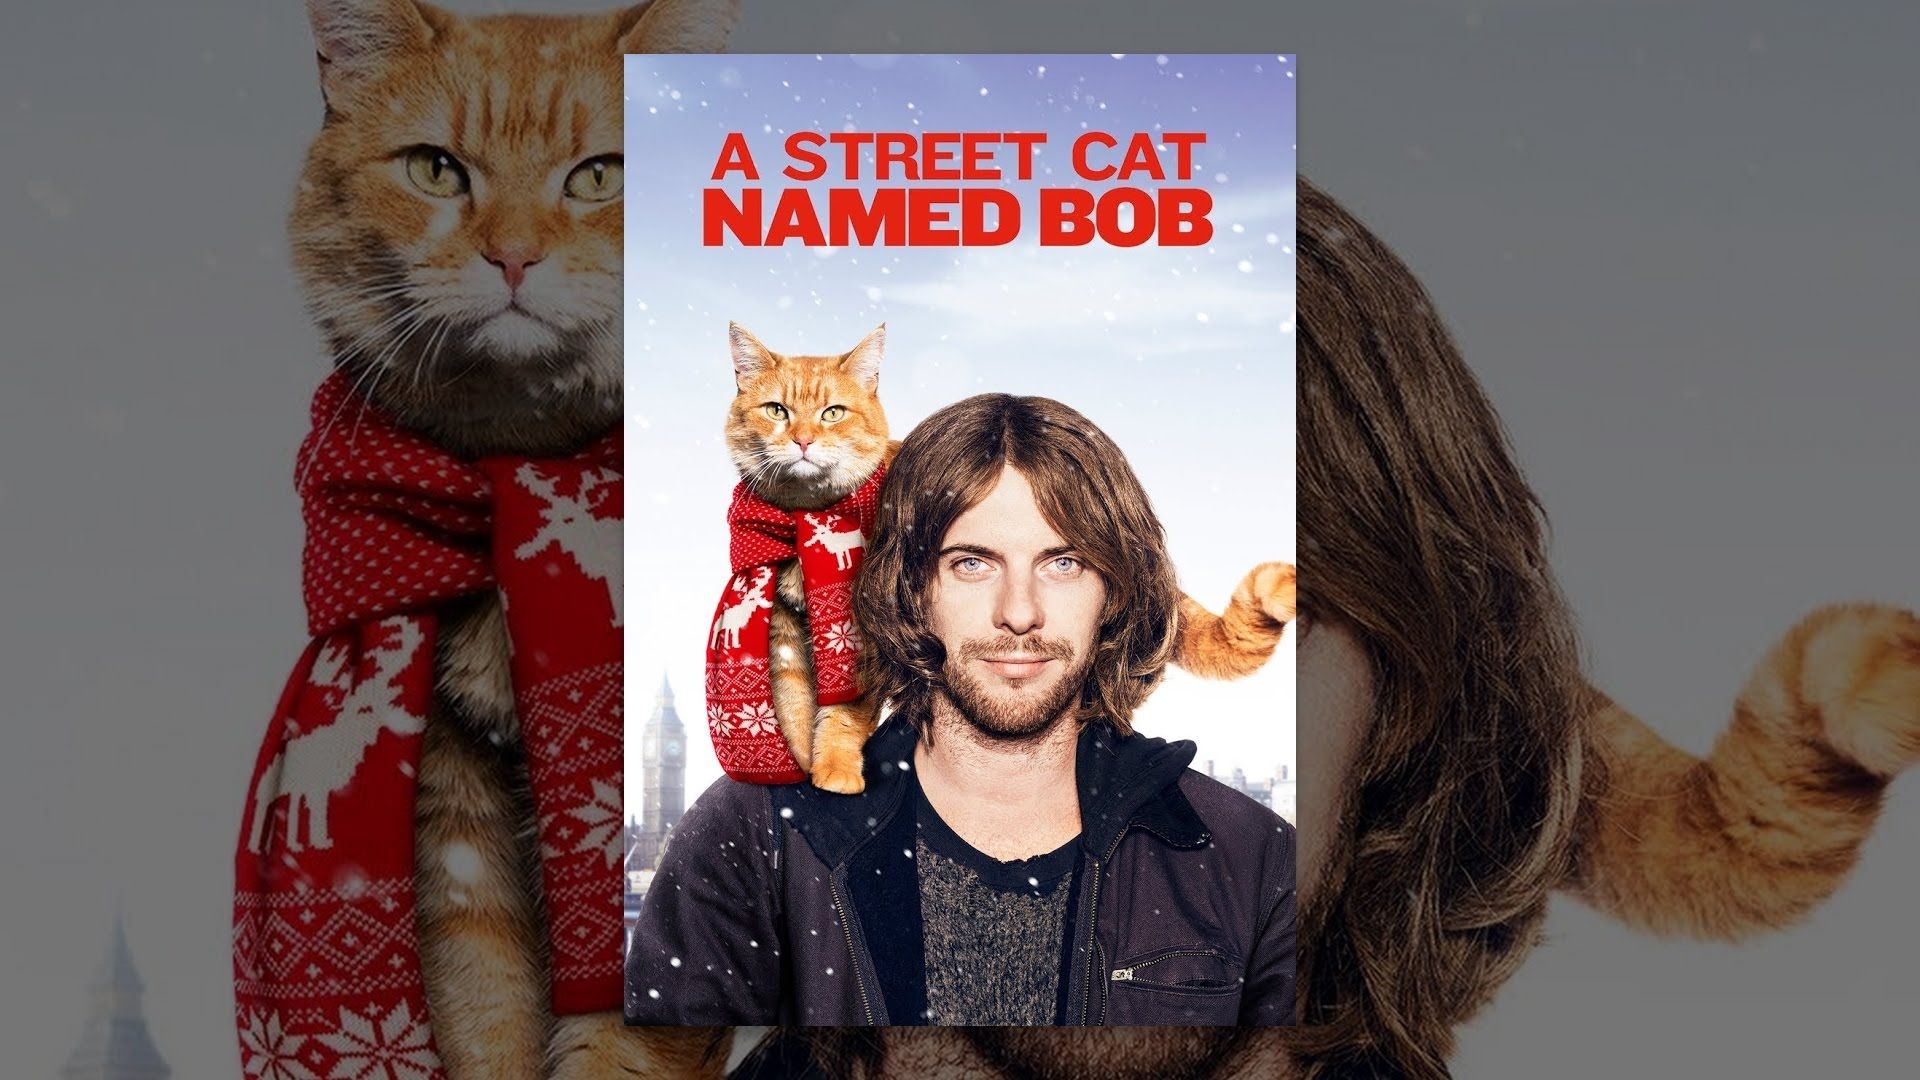 Hello street cat петиция остановите. A Street Cat named Bob (2016).